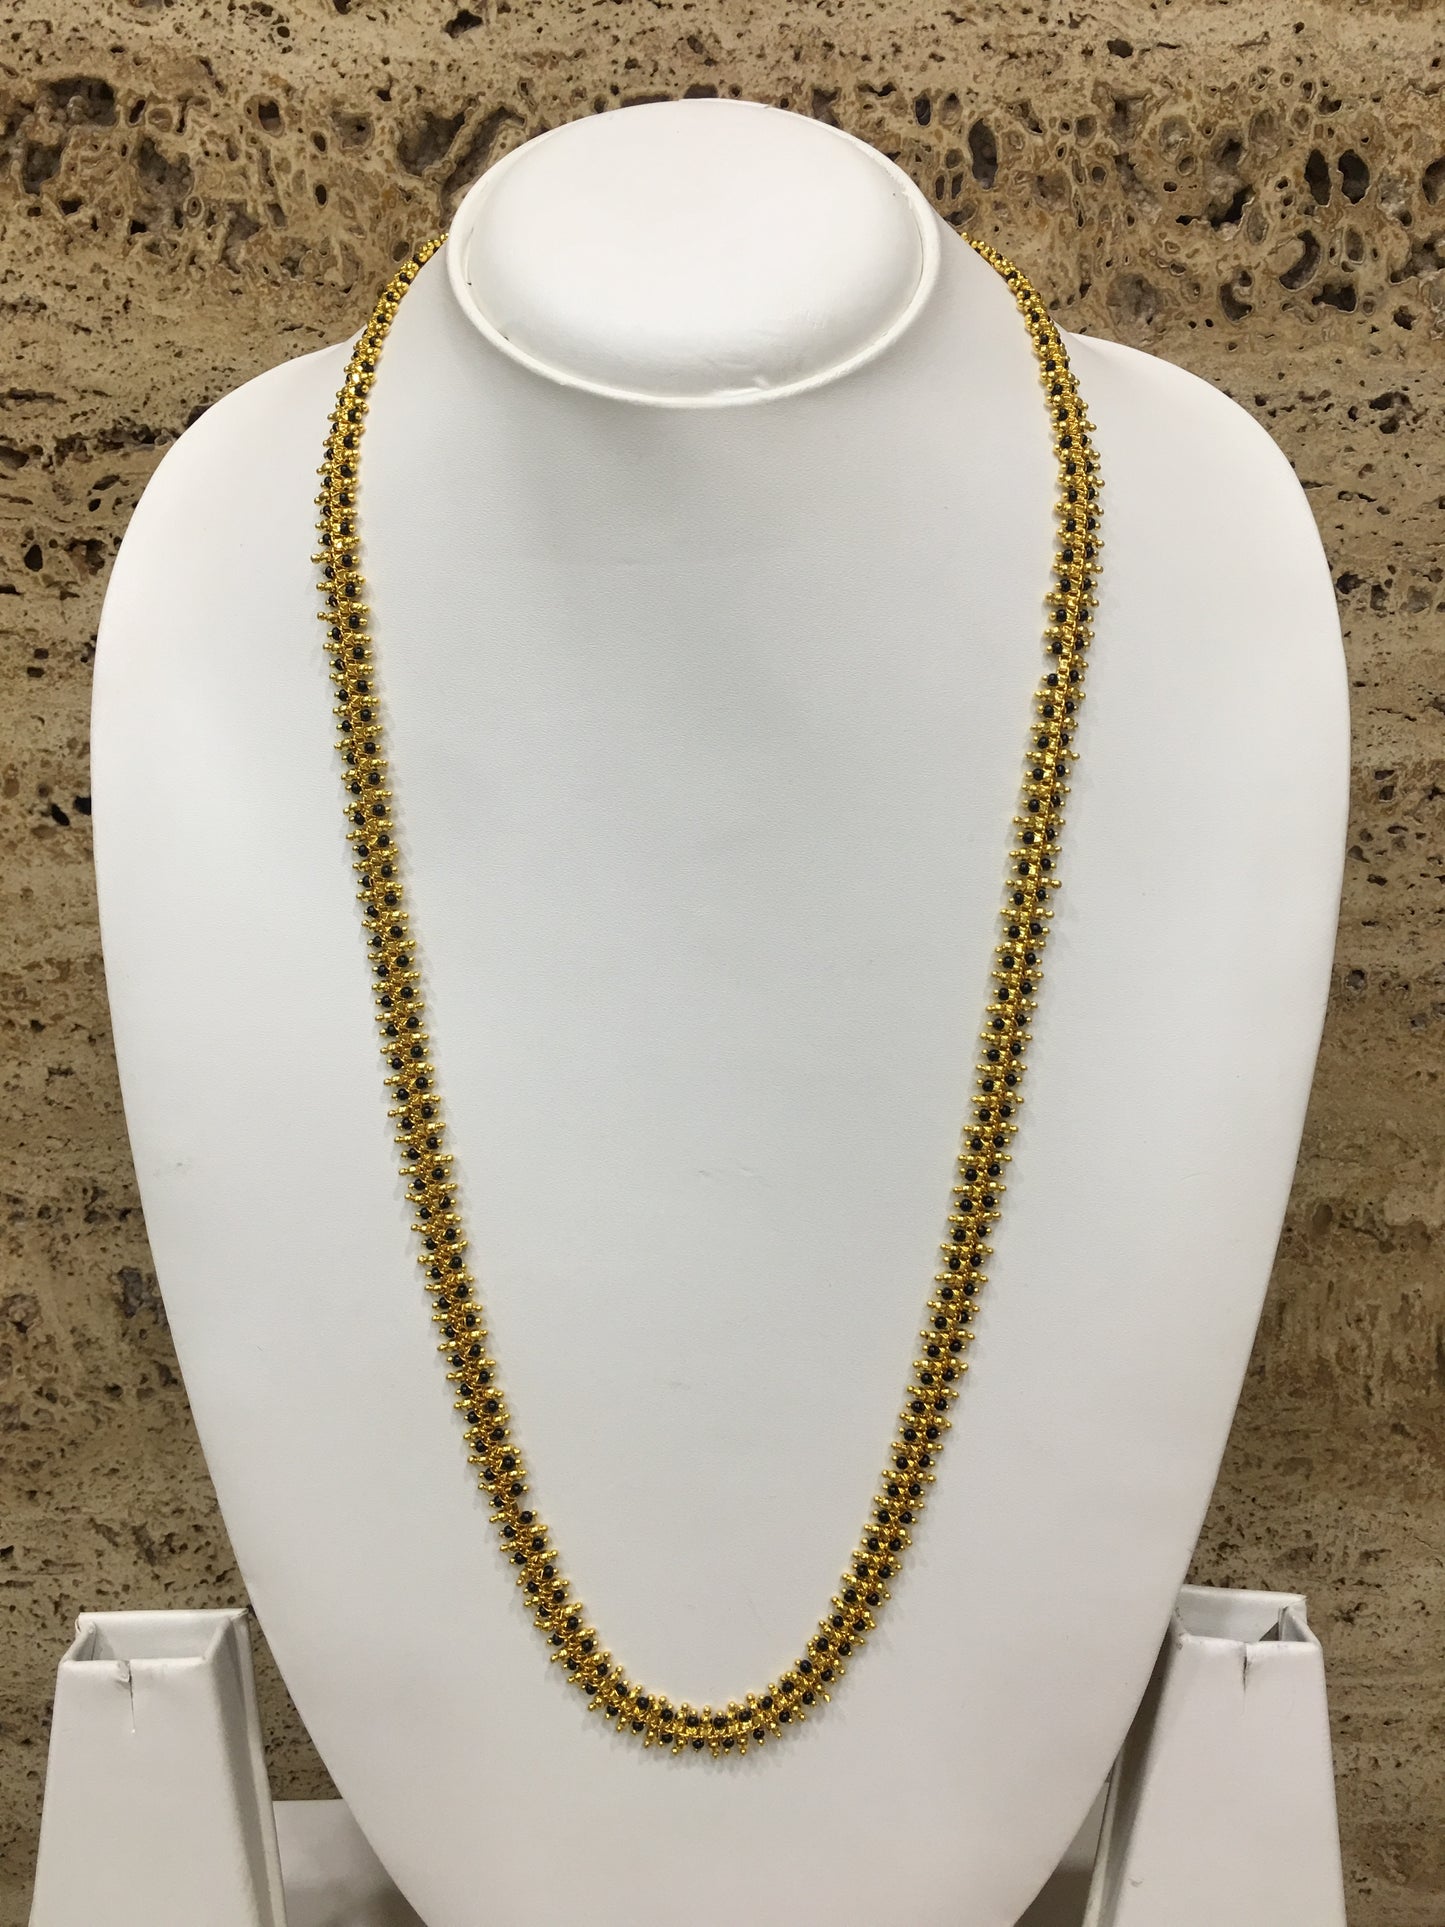 Digital Dress Room Long Mangalsutra Designs Gold Plated Latest Black & Gold Beads Mangalsutra